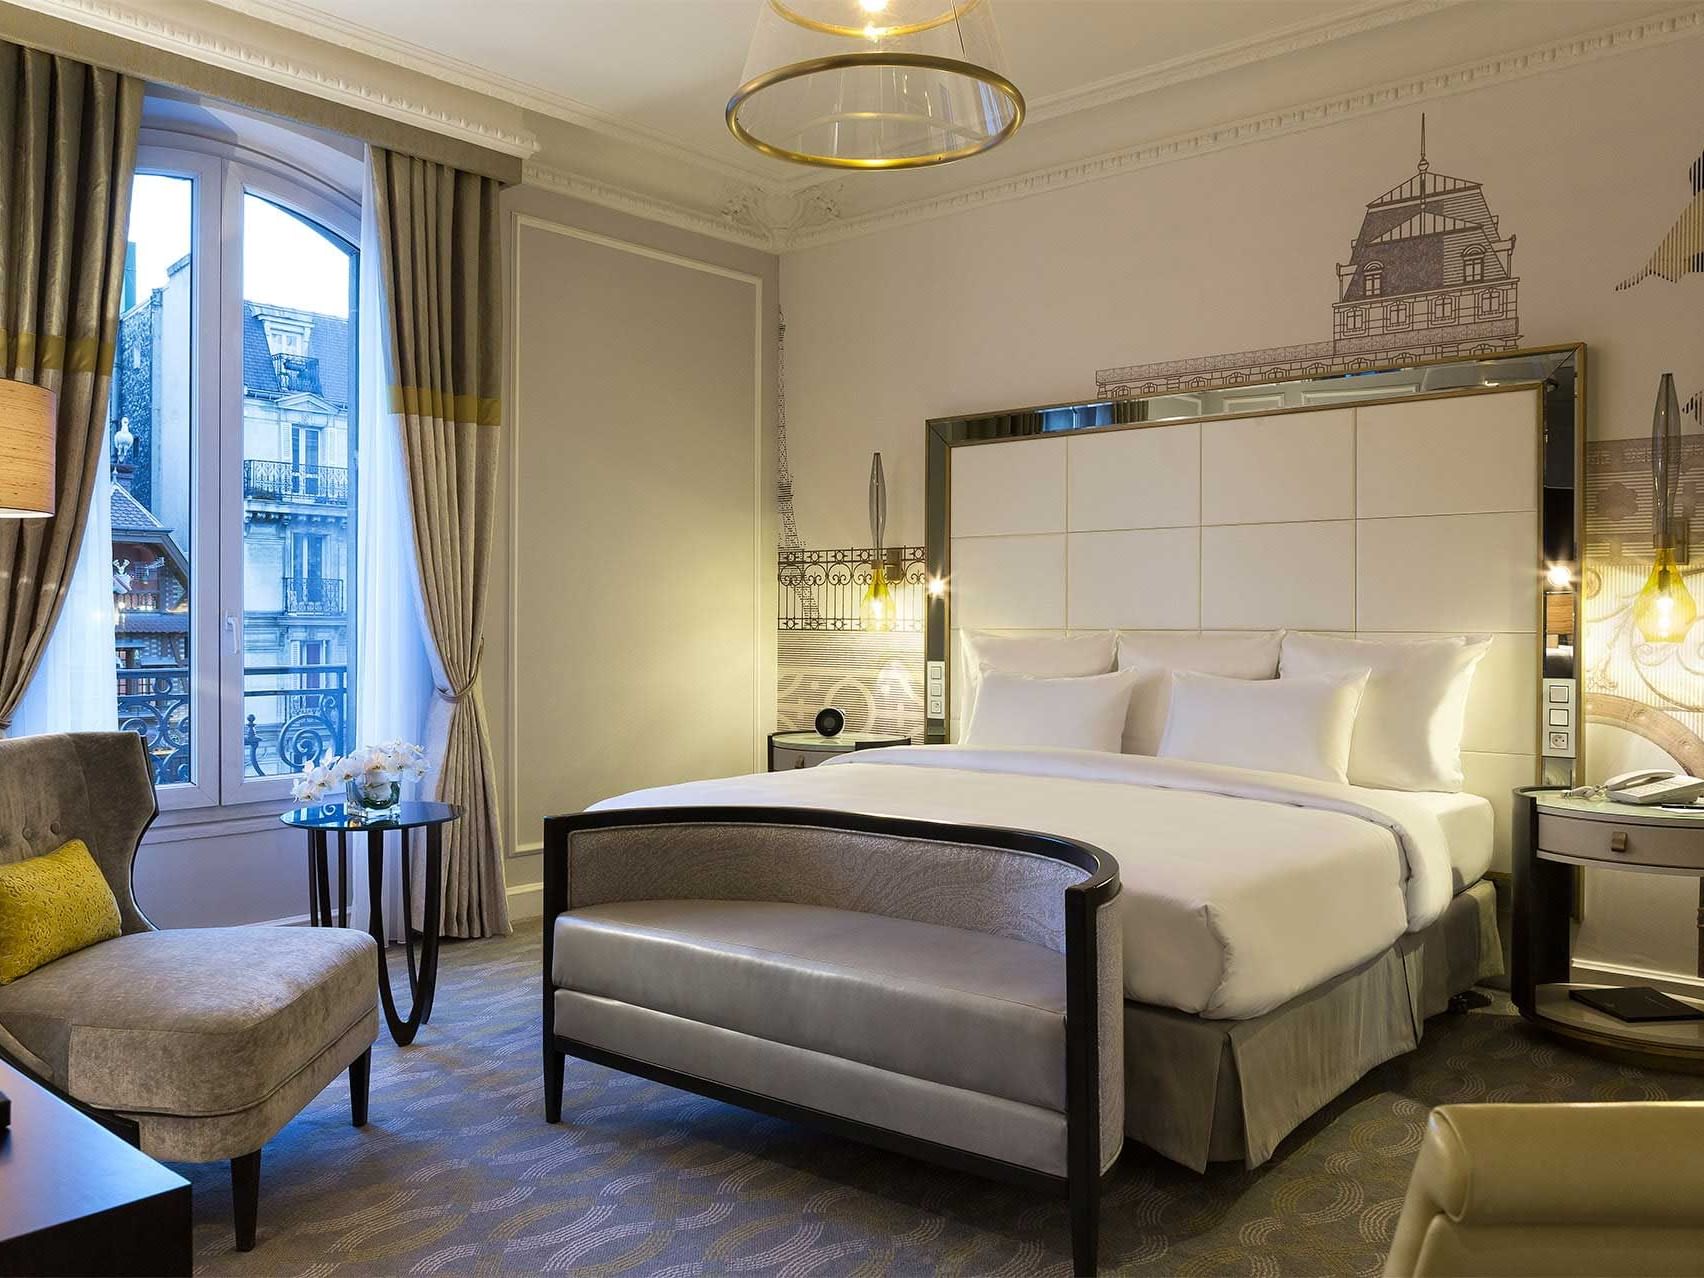 Bed & furniture in Executive Room at Hilton Paris Opera Hotel